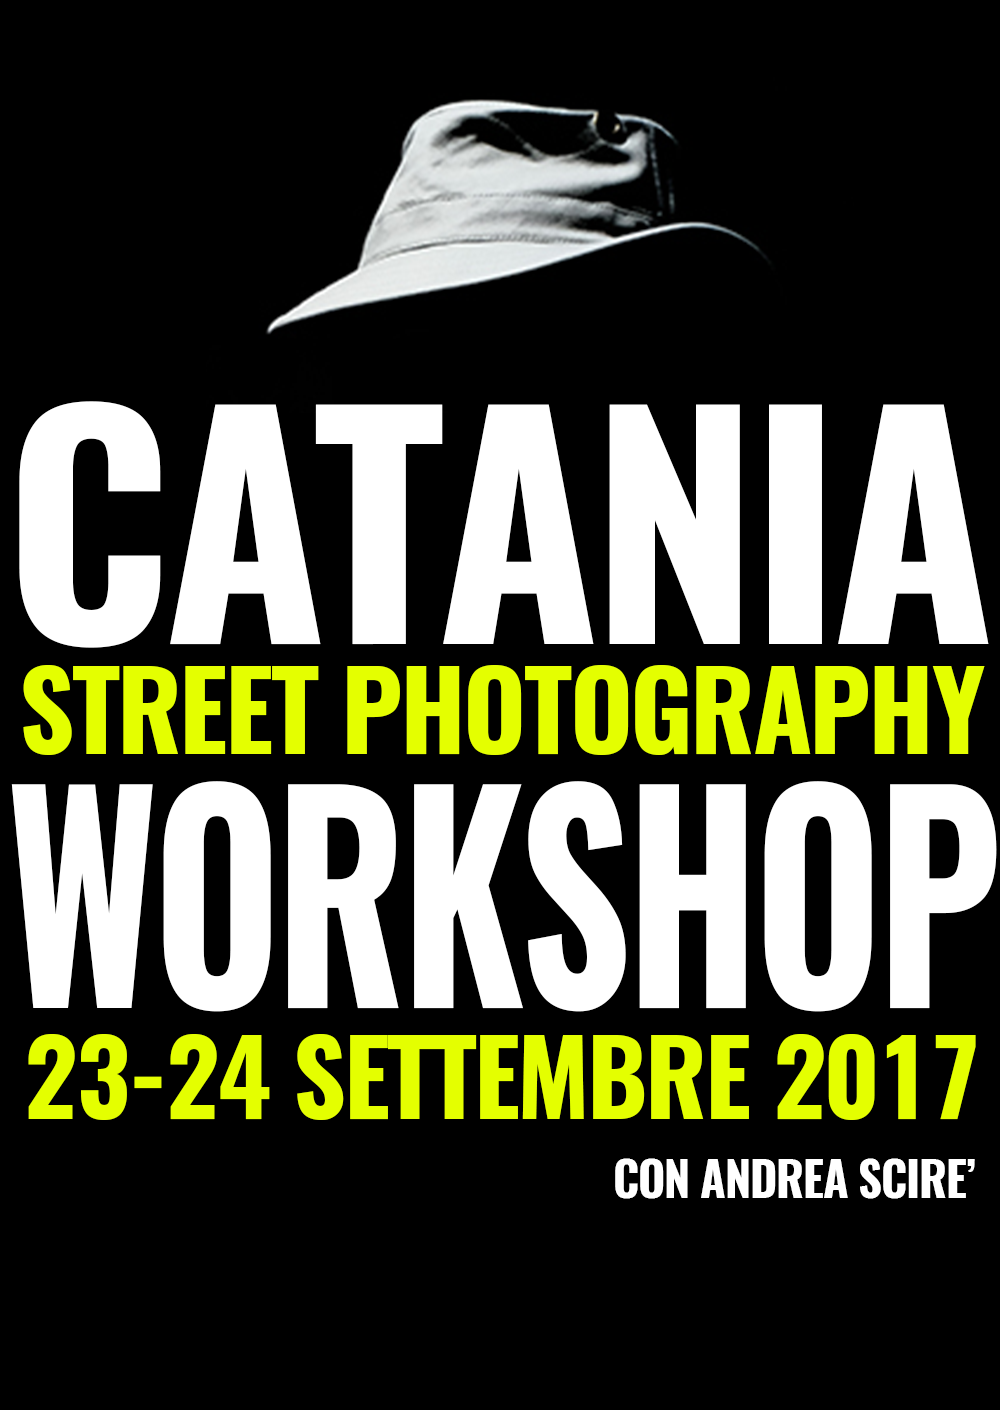 Catania Street Photography Workshop ed Experience con Andrea Scirè